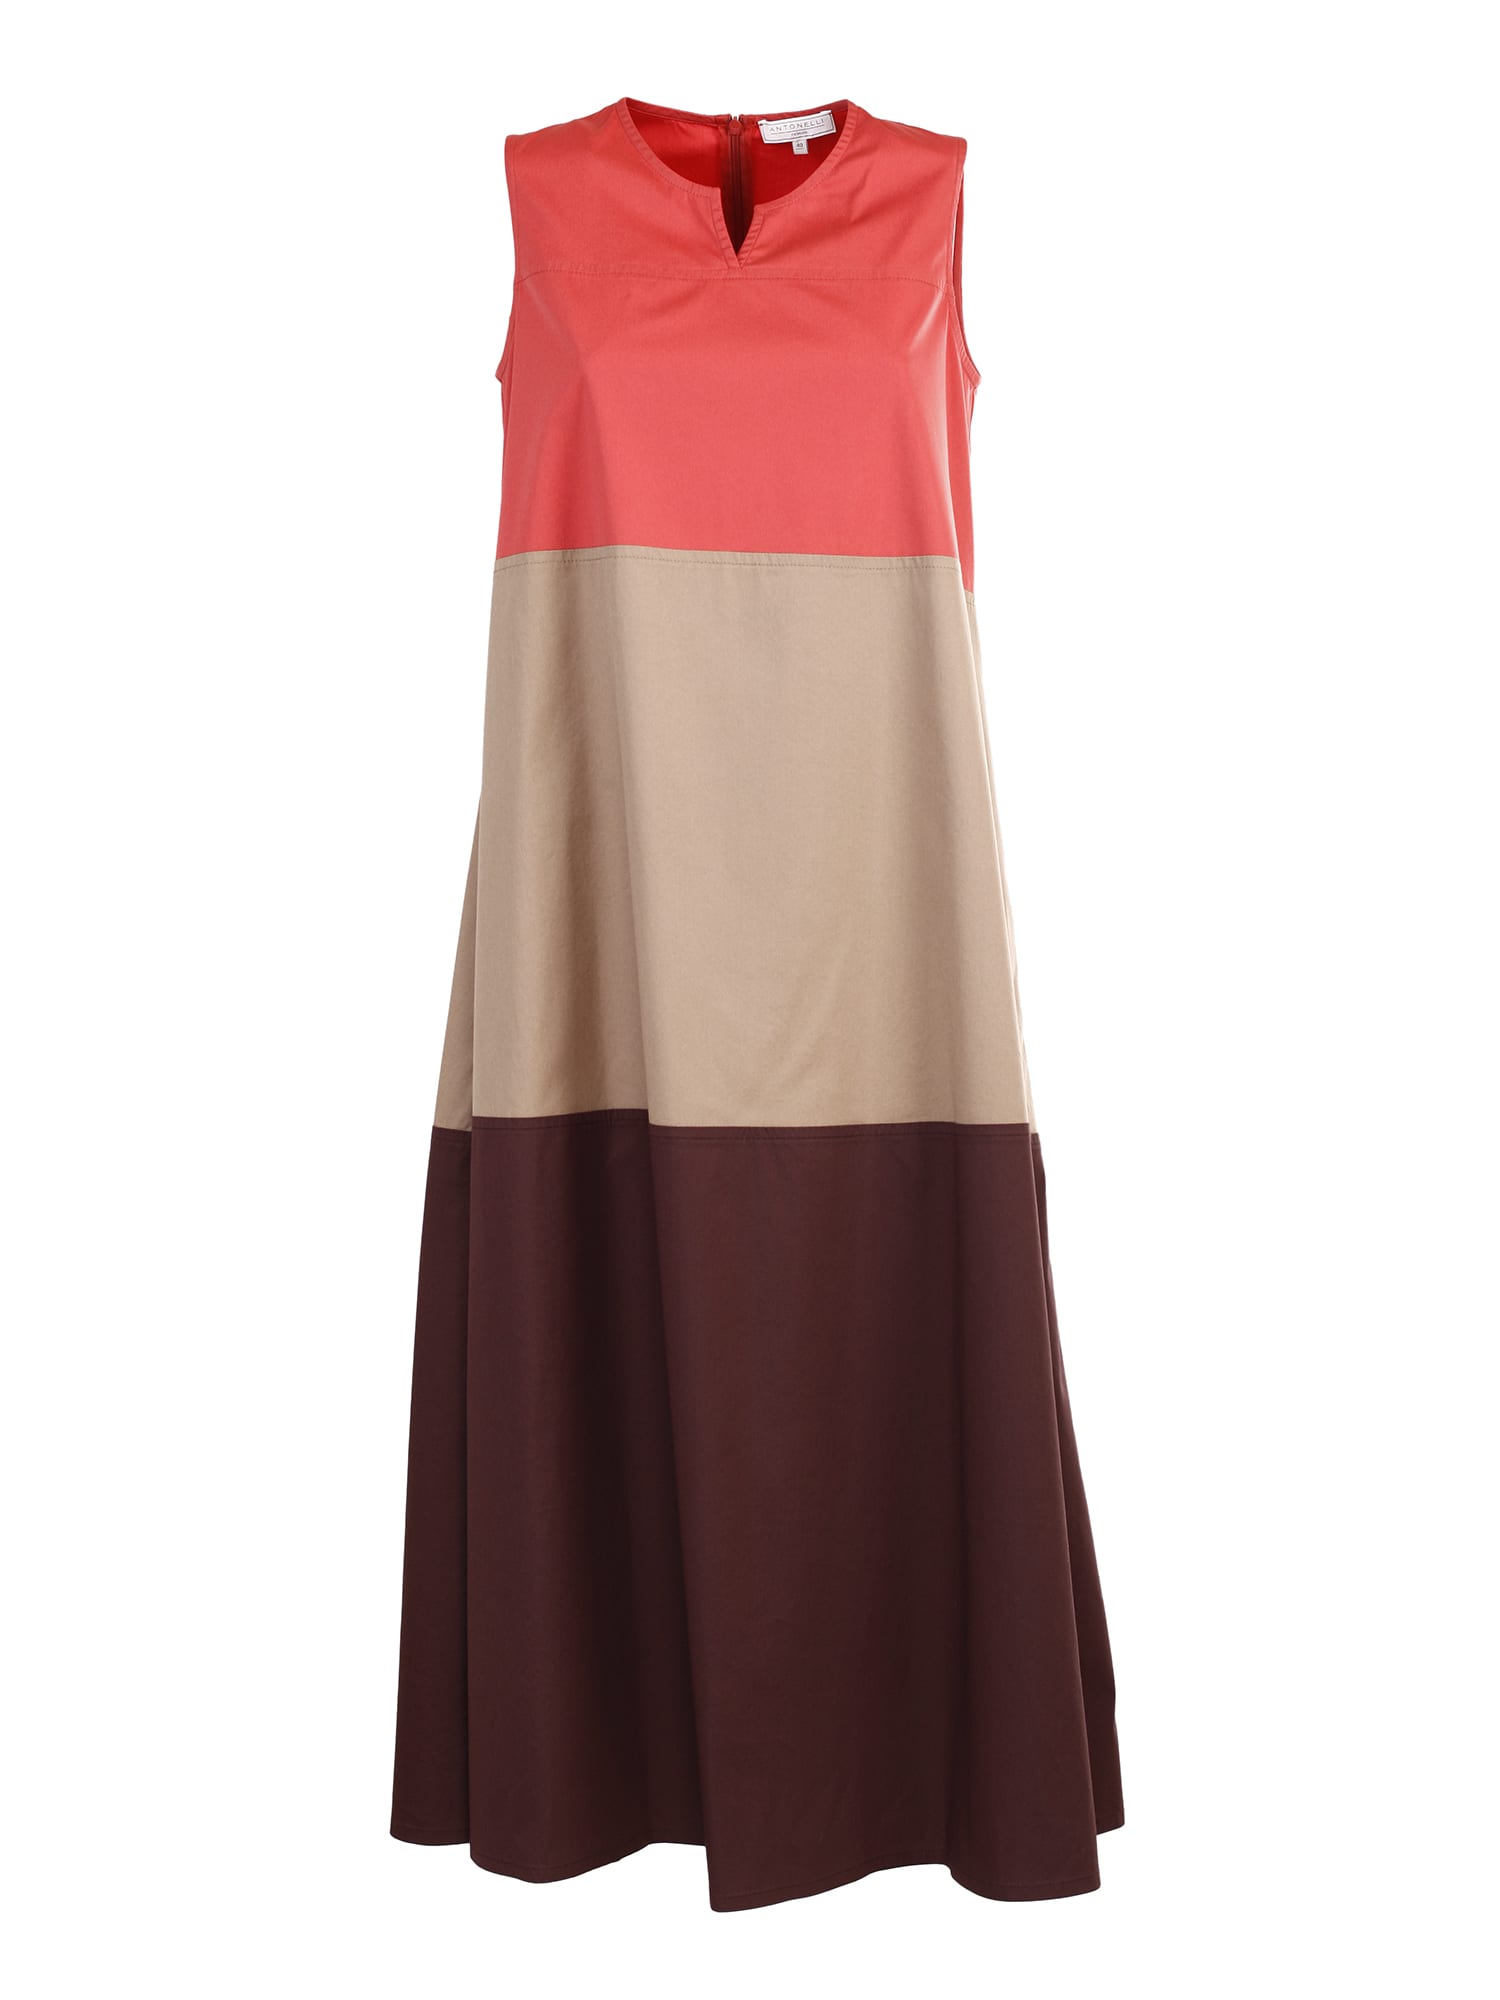 Antonelli color block dress